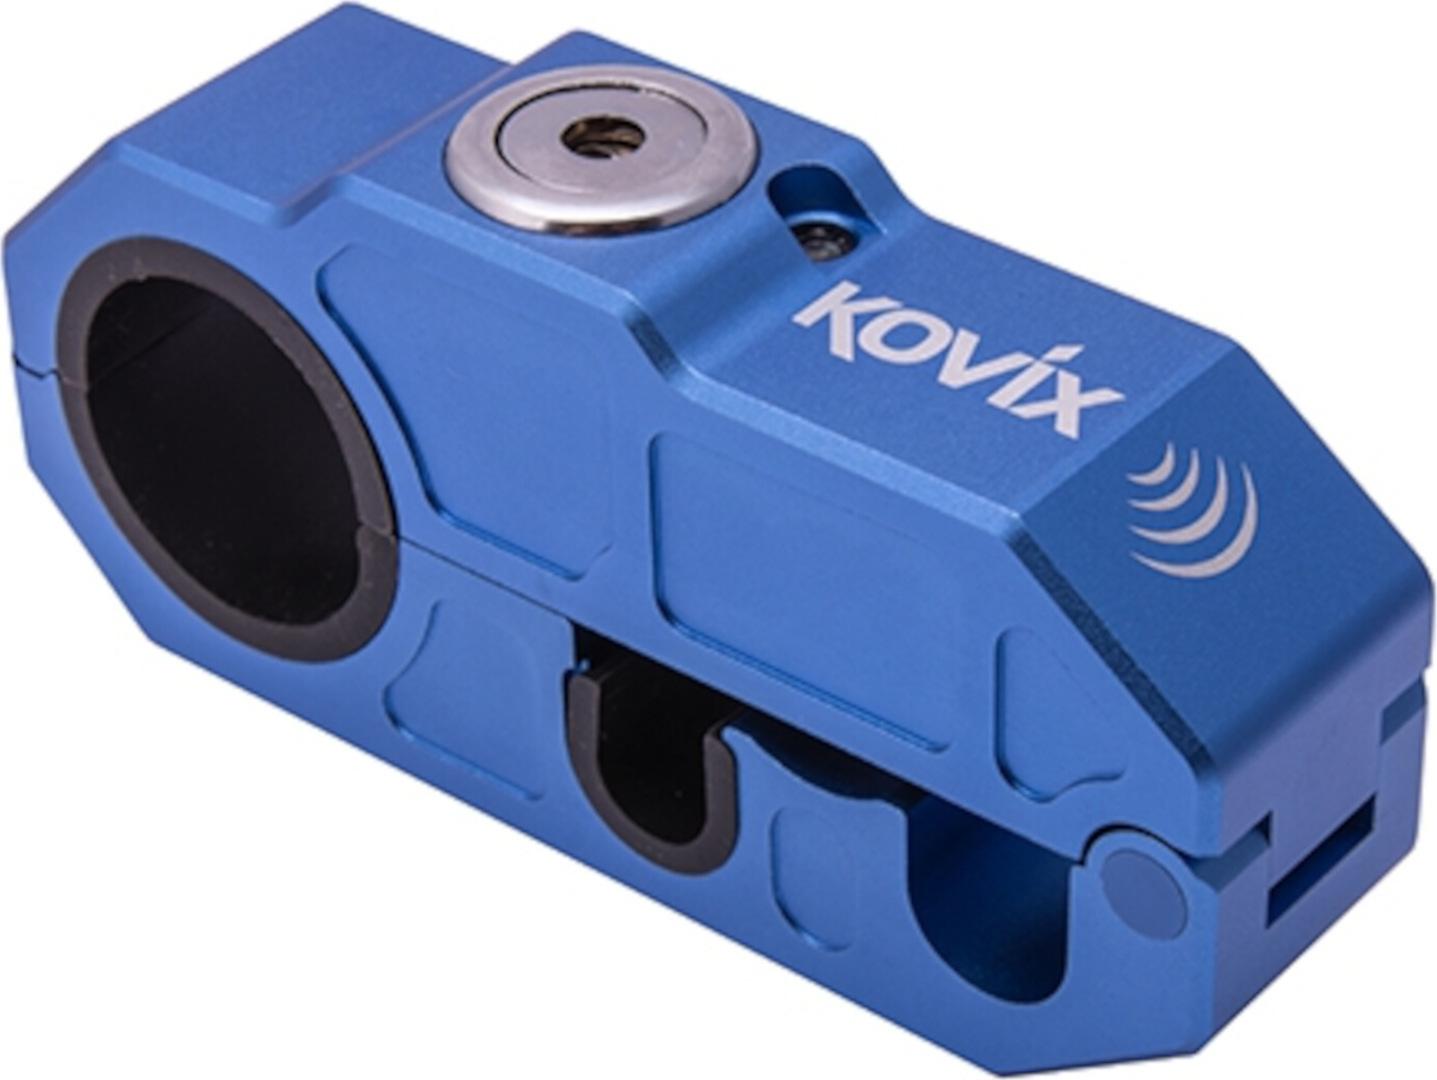 Kovix KHL Alarm Grip Lock, blue, blue, Size One Size